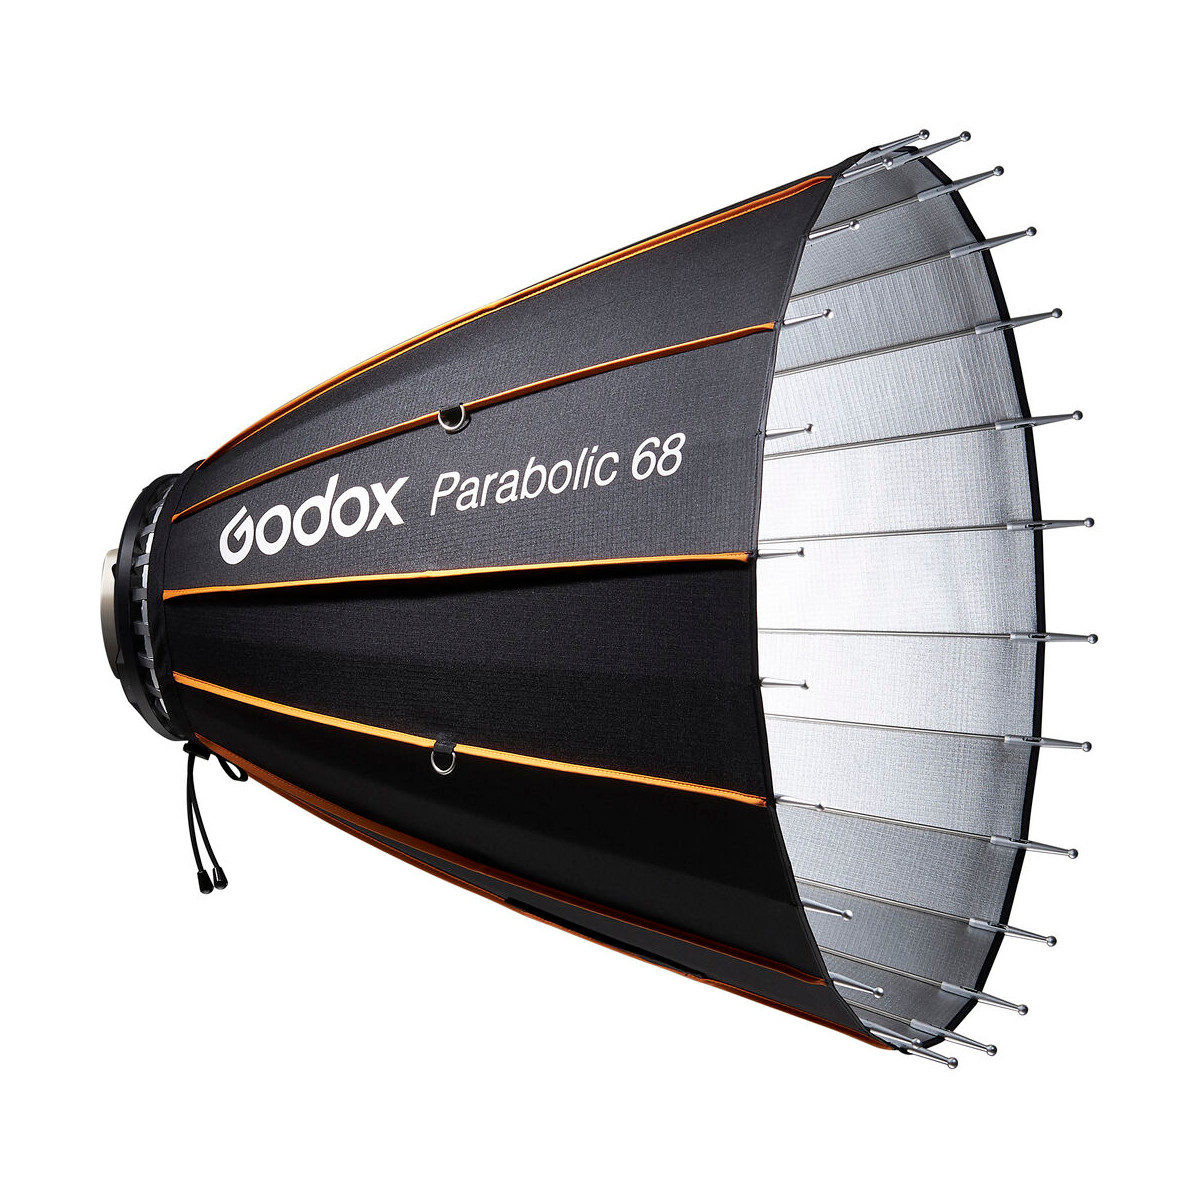 Godox Parabolic68 Reflector